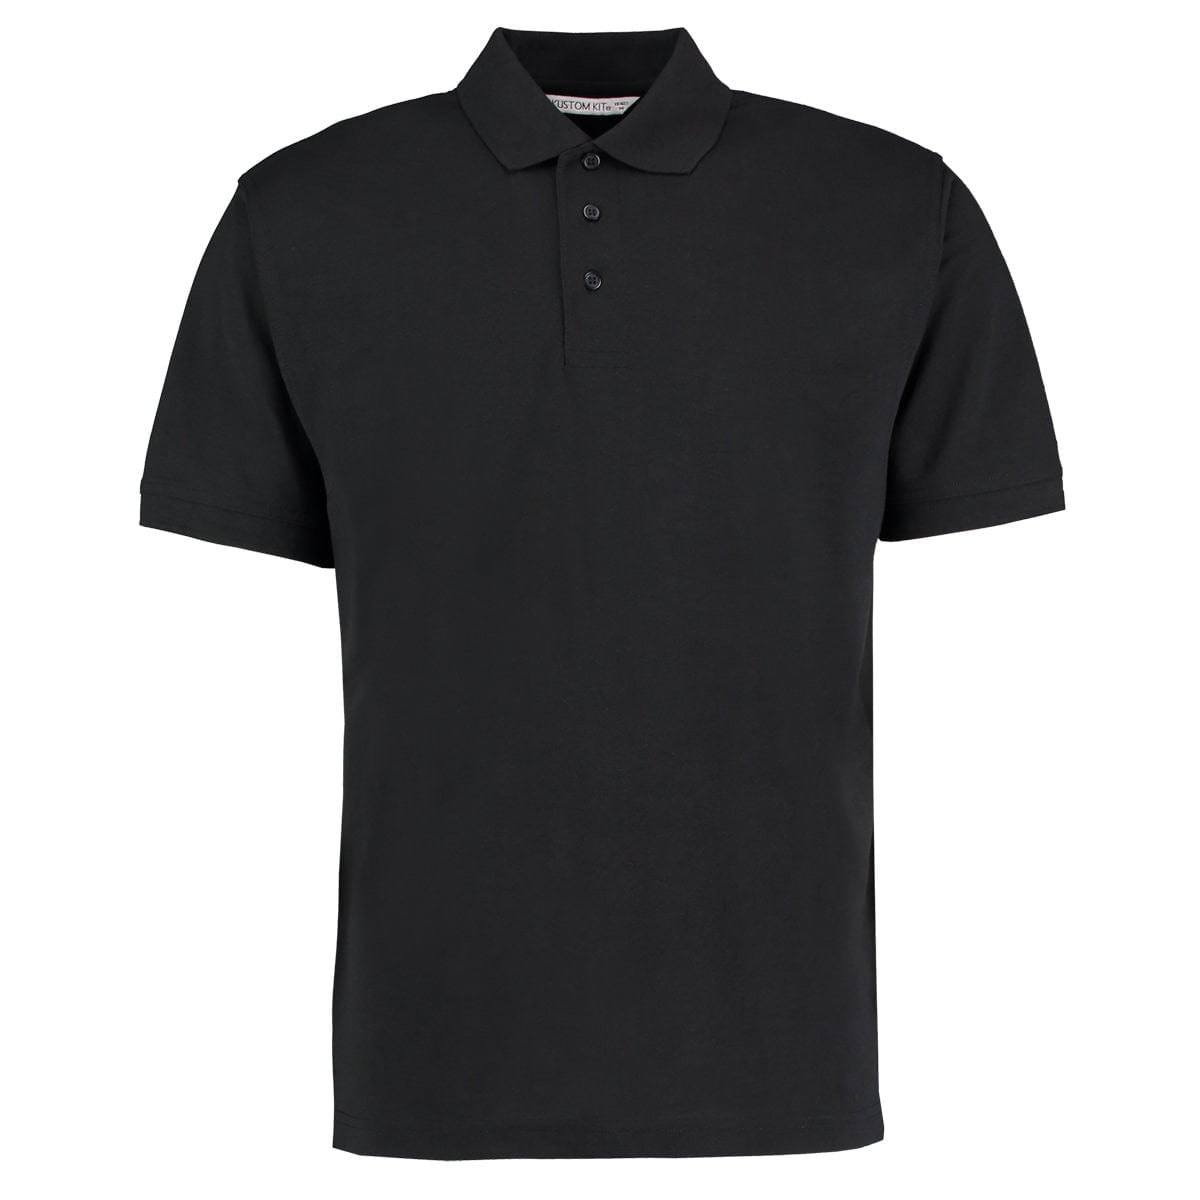 Black - Robocza koszulka polo Superwash 60°